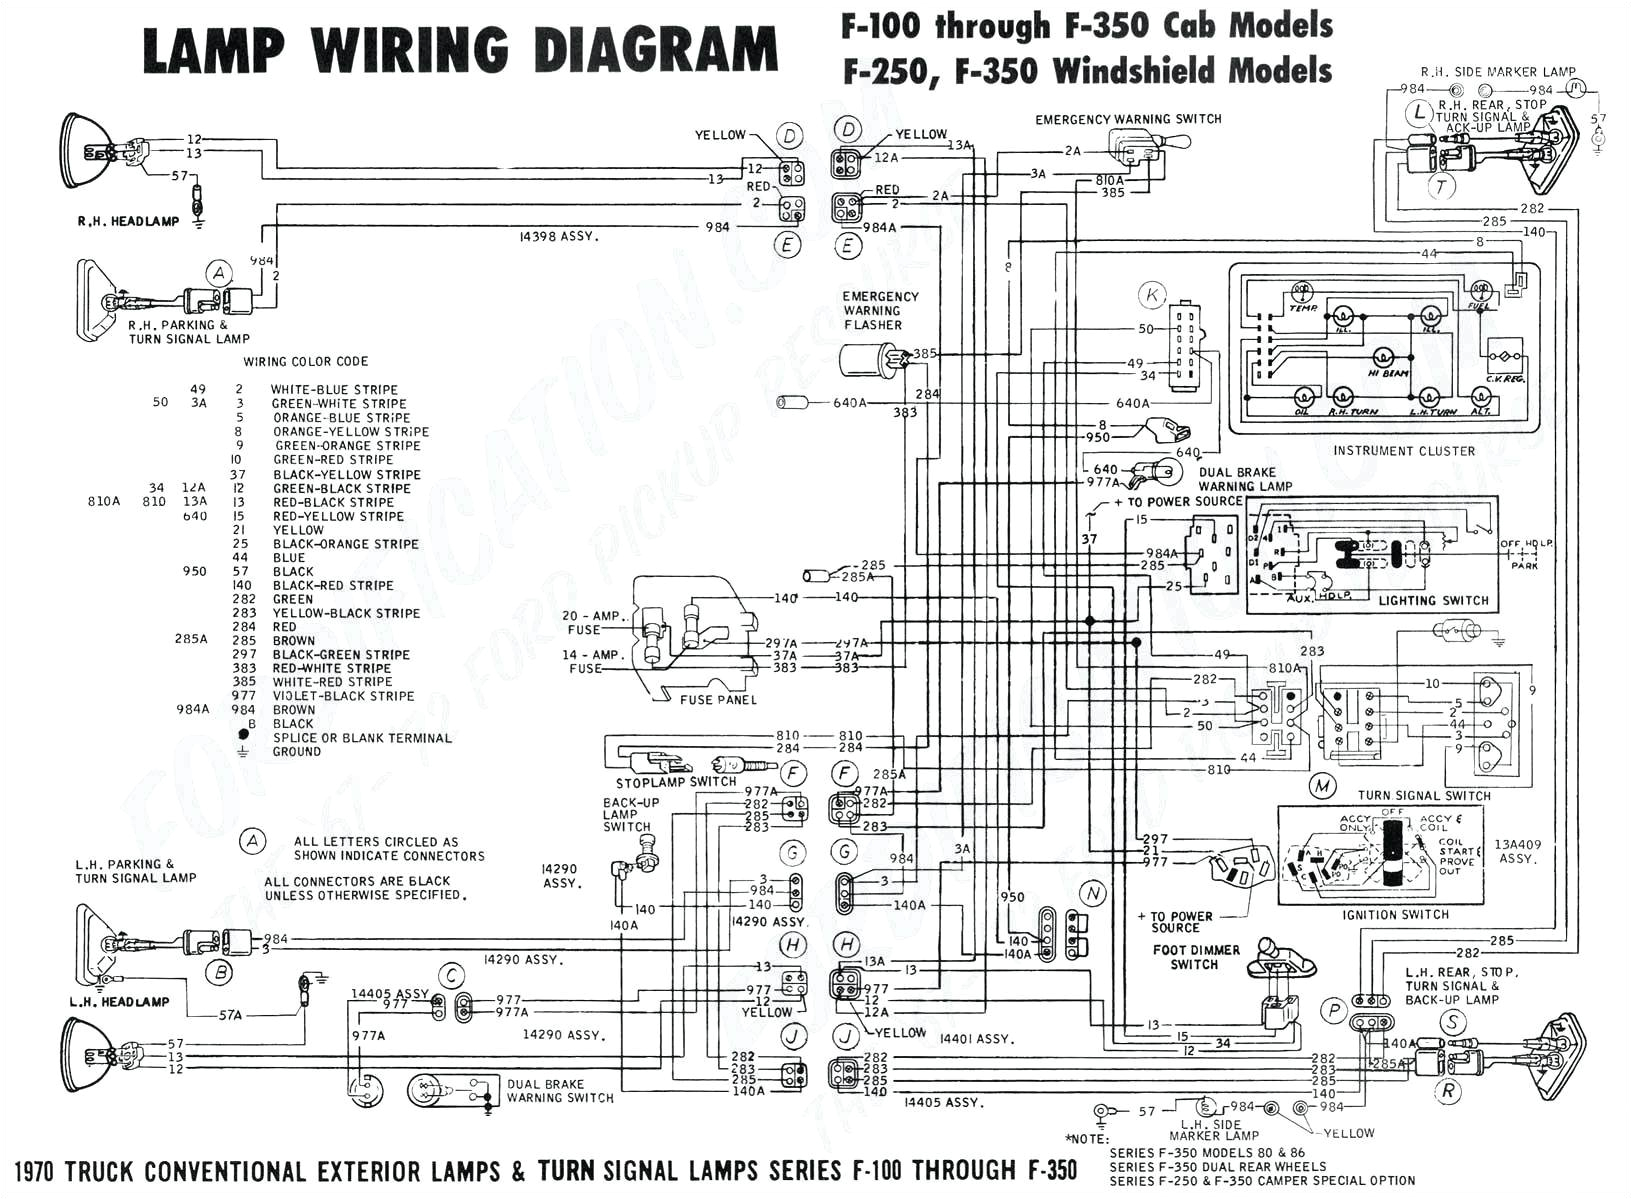 co sensor wiring diagram wiring diagram megaco sensor wiring diagram wiring diagram datasource co sensor wiring